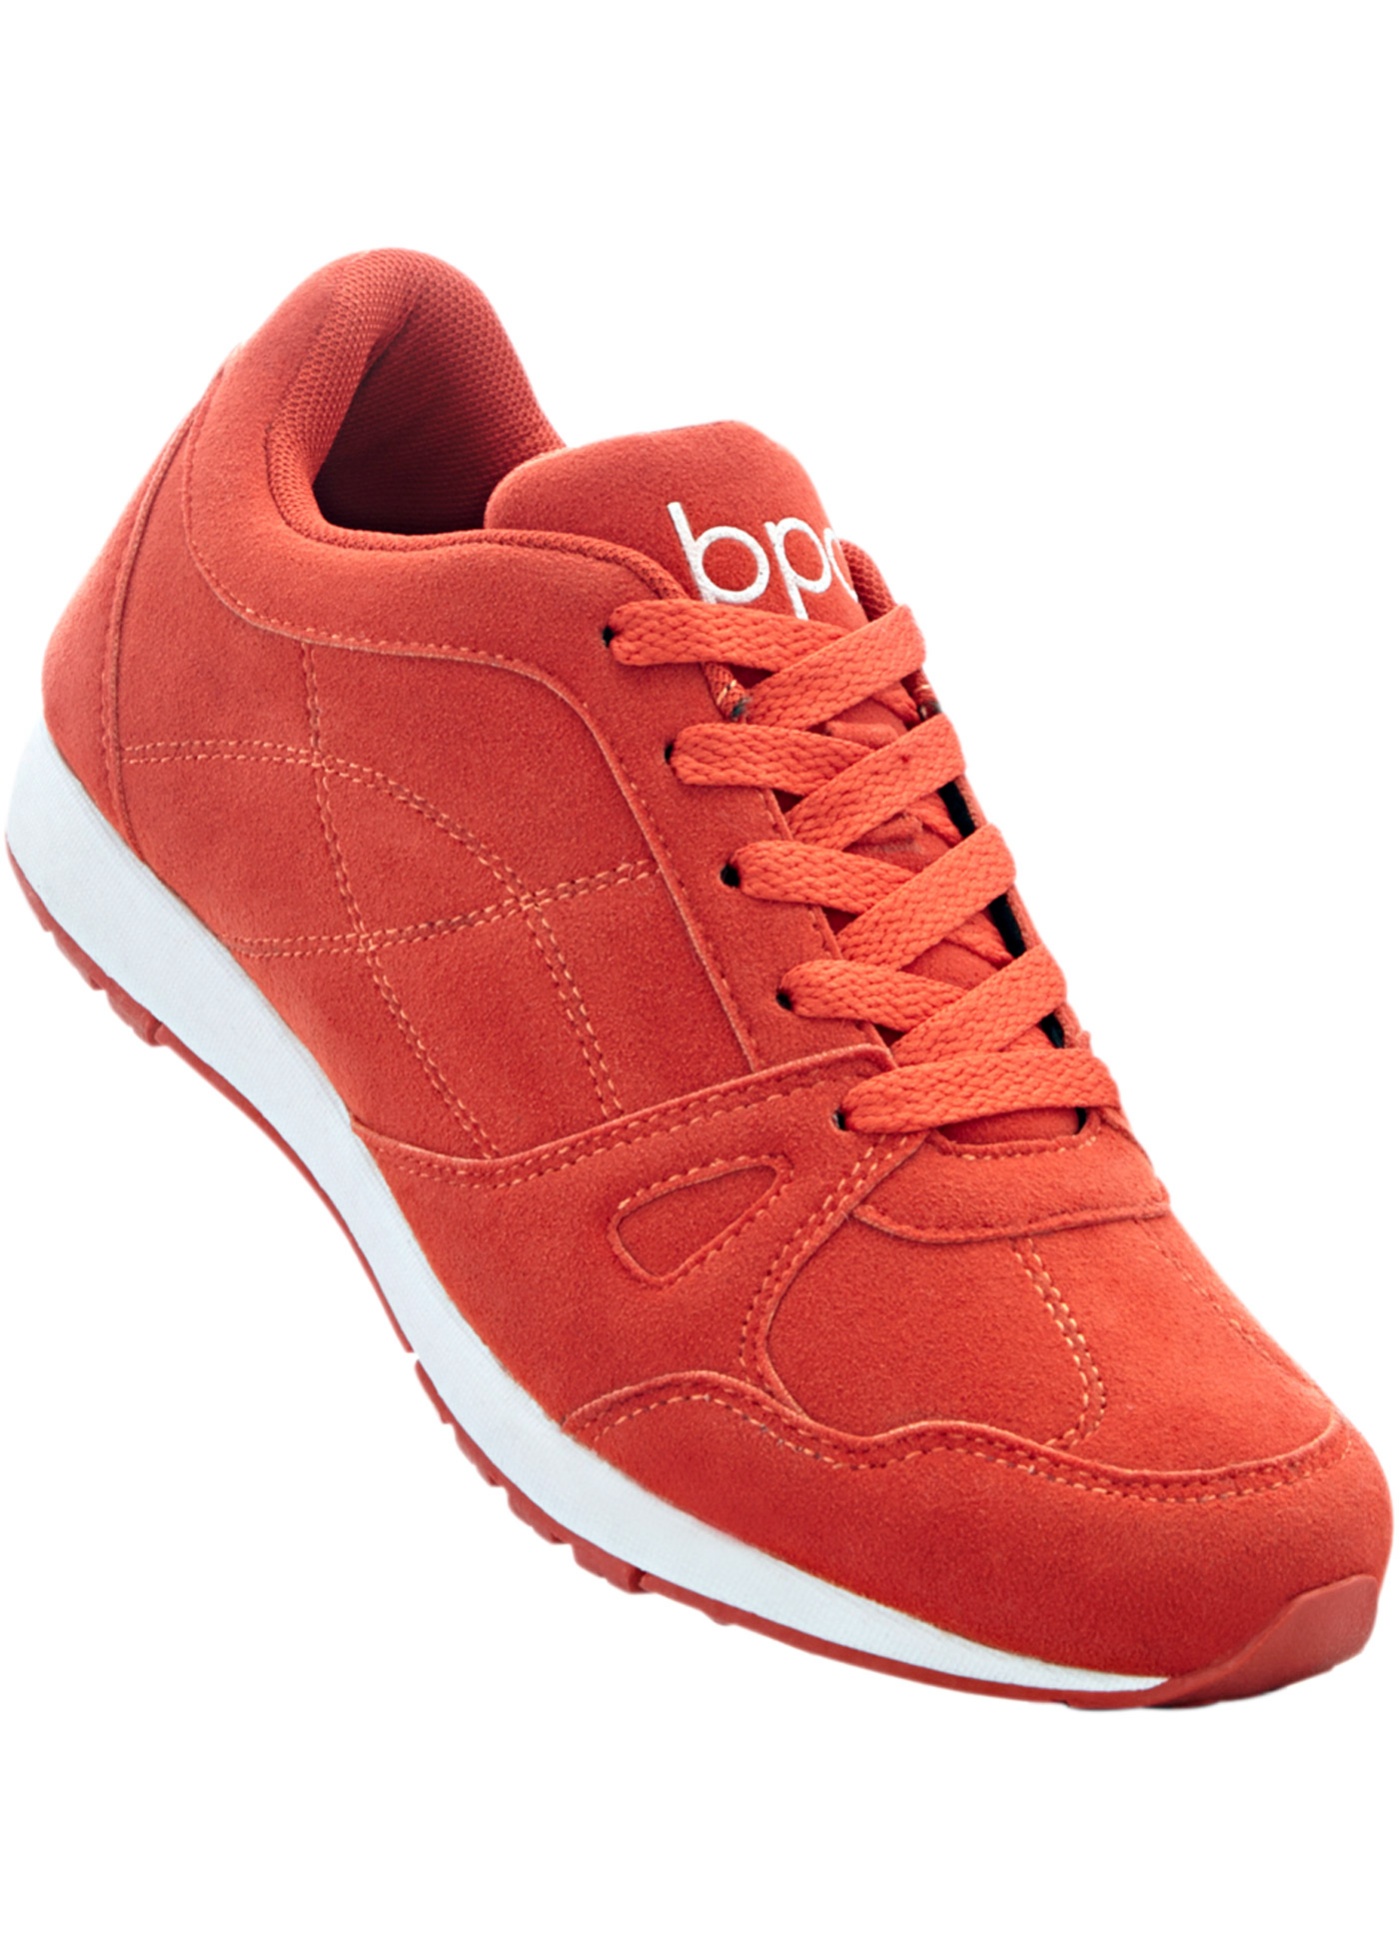 Sneakers (Rosso) - bpc bonprix collection